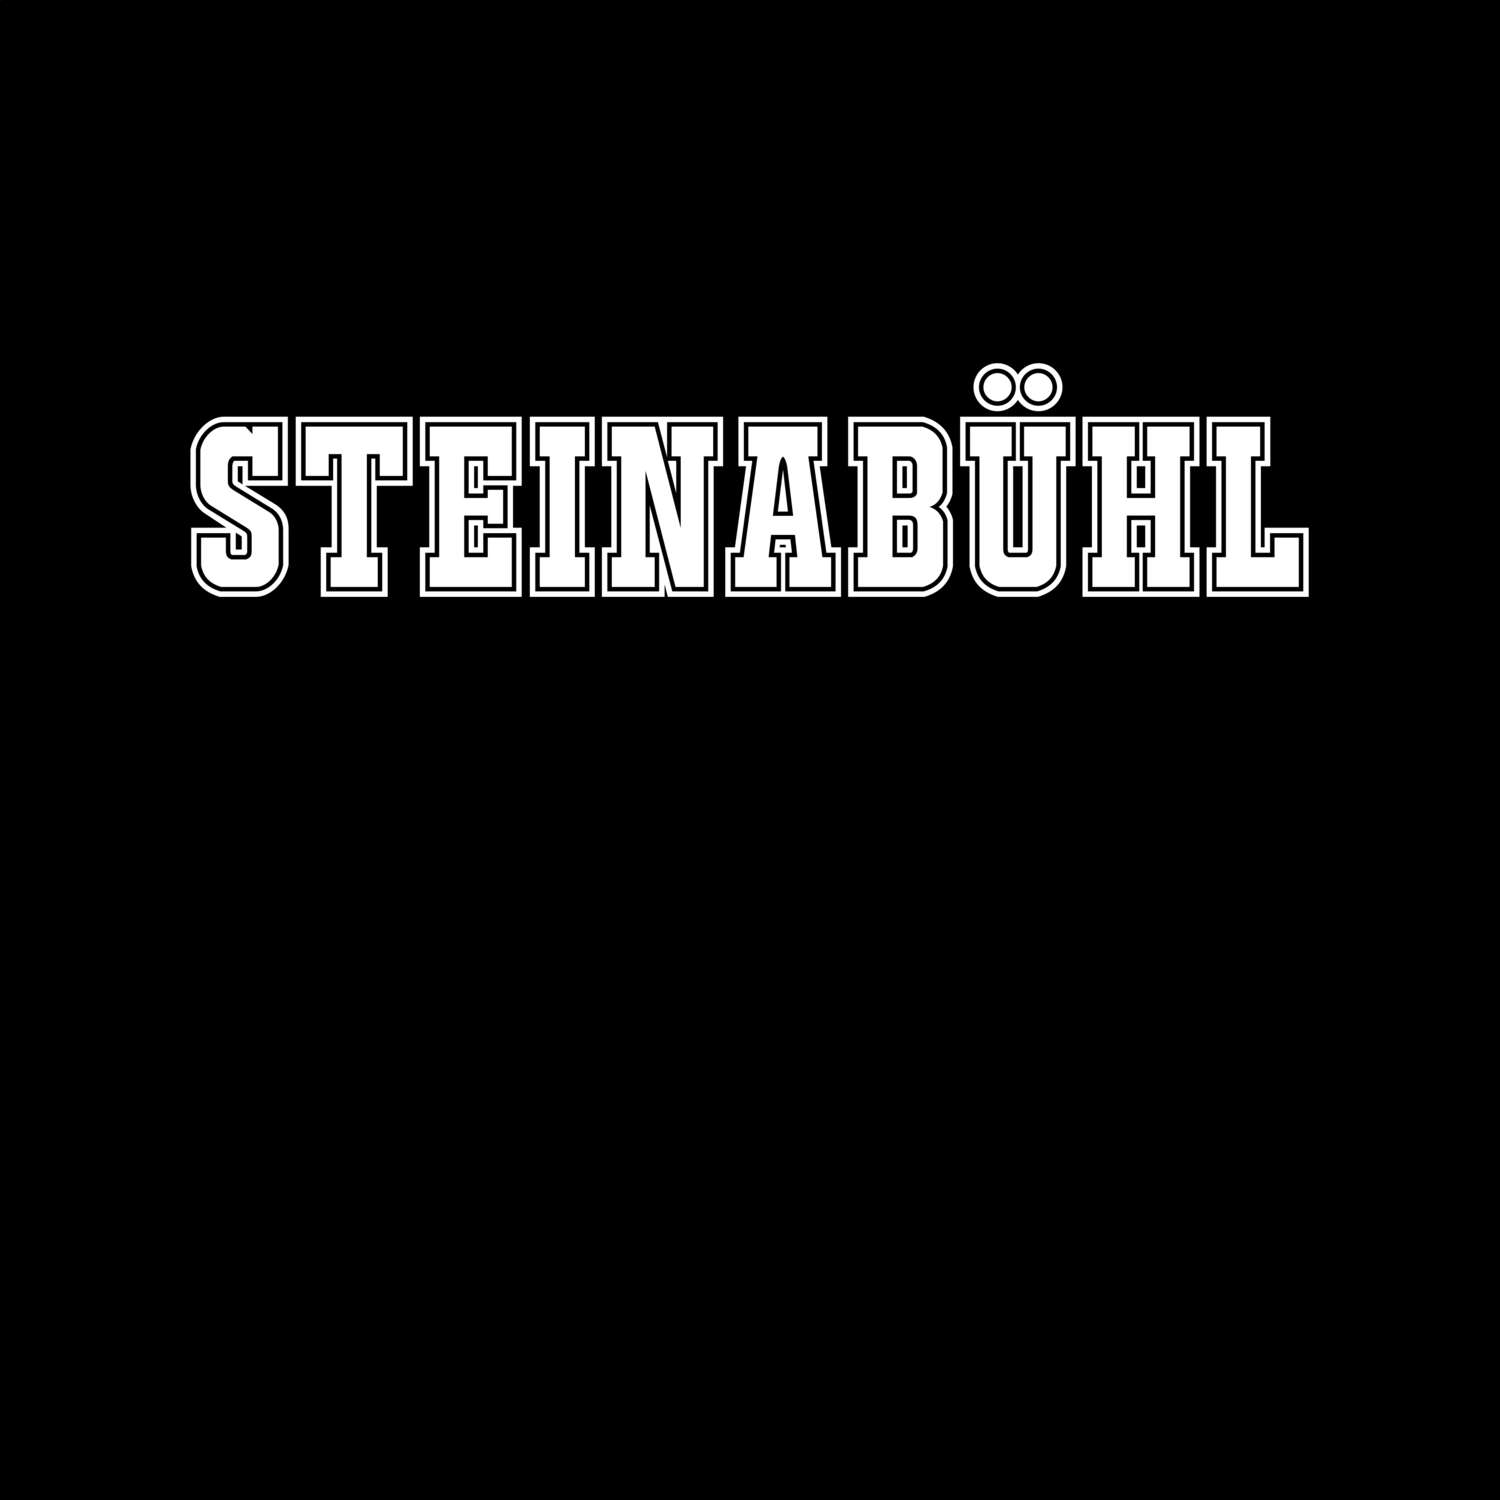 Steinabühl T-Shirt »Classic«